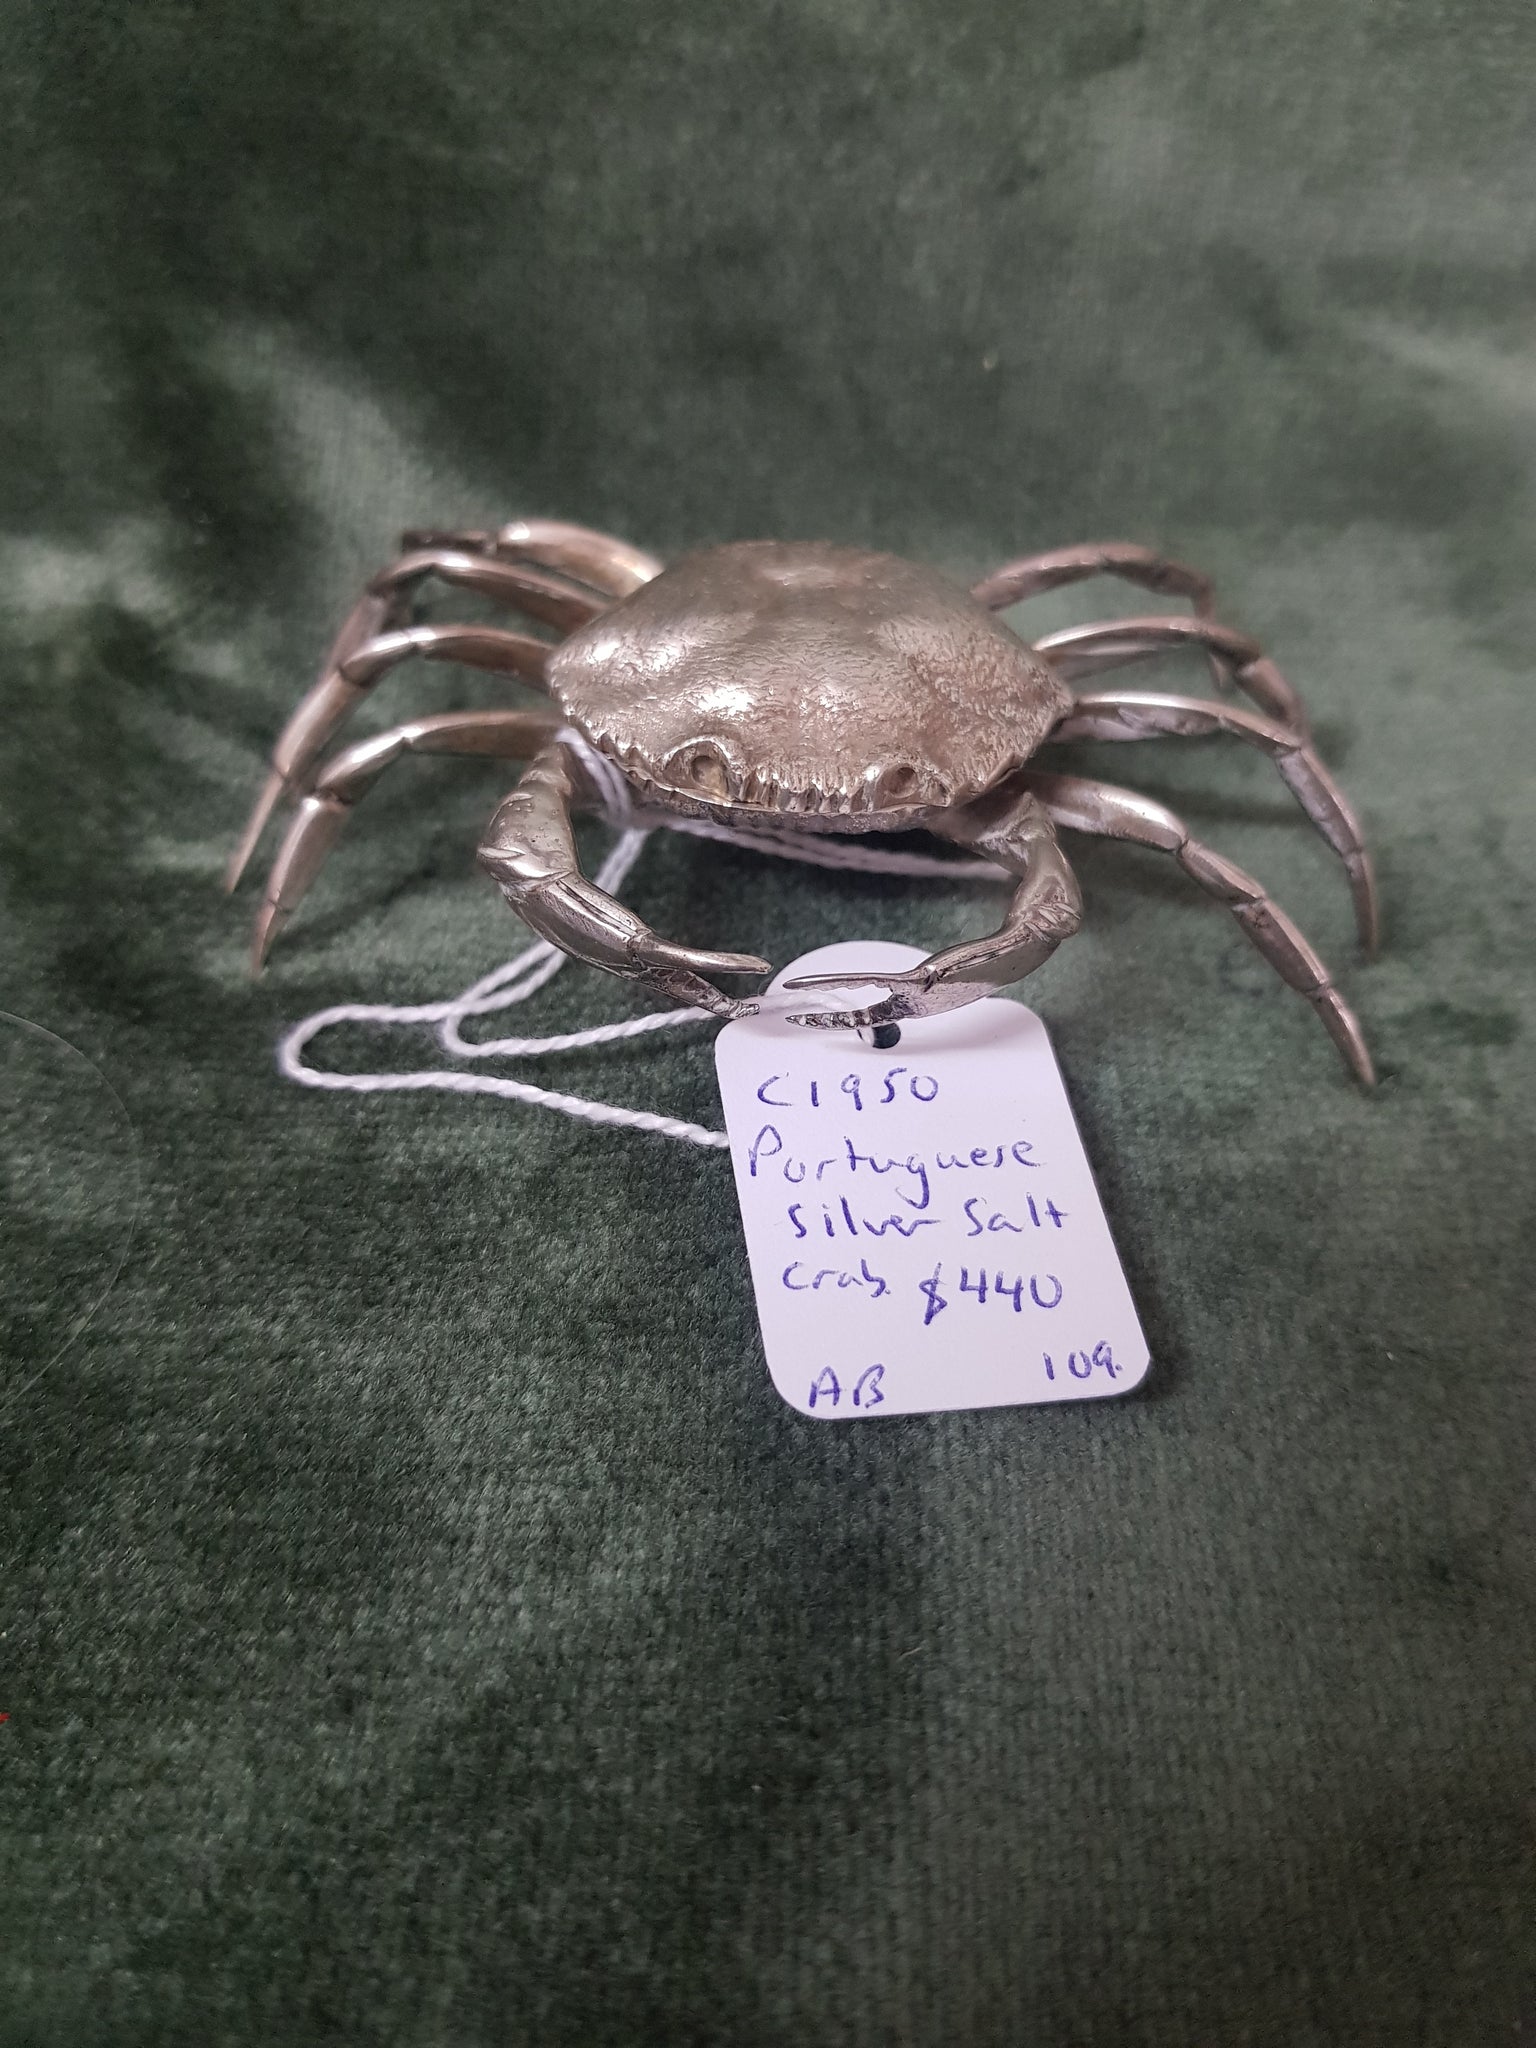 c1950 Portugeuse Silver crab salt sellor 9cm across #109